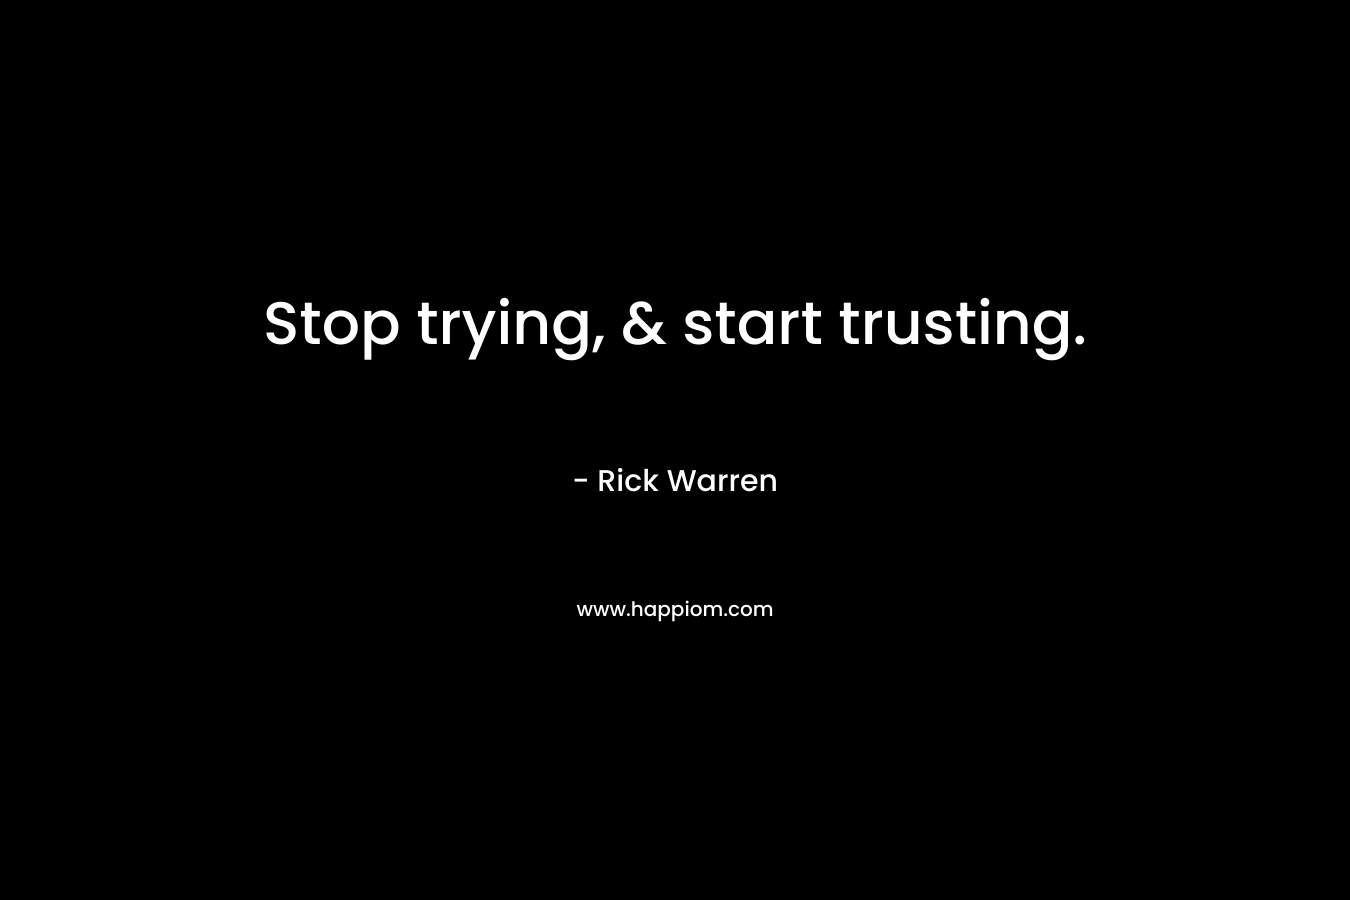 Stop trying, & start trusting.